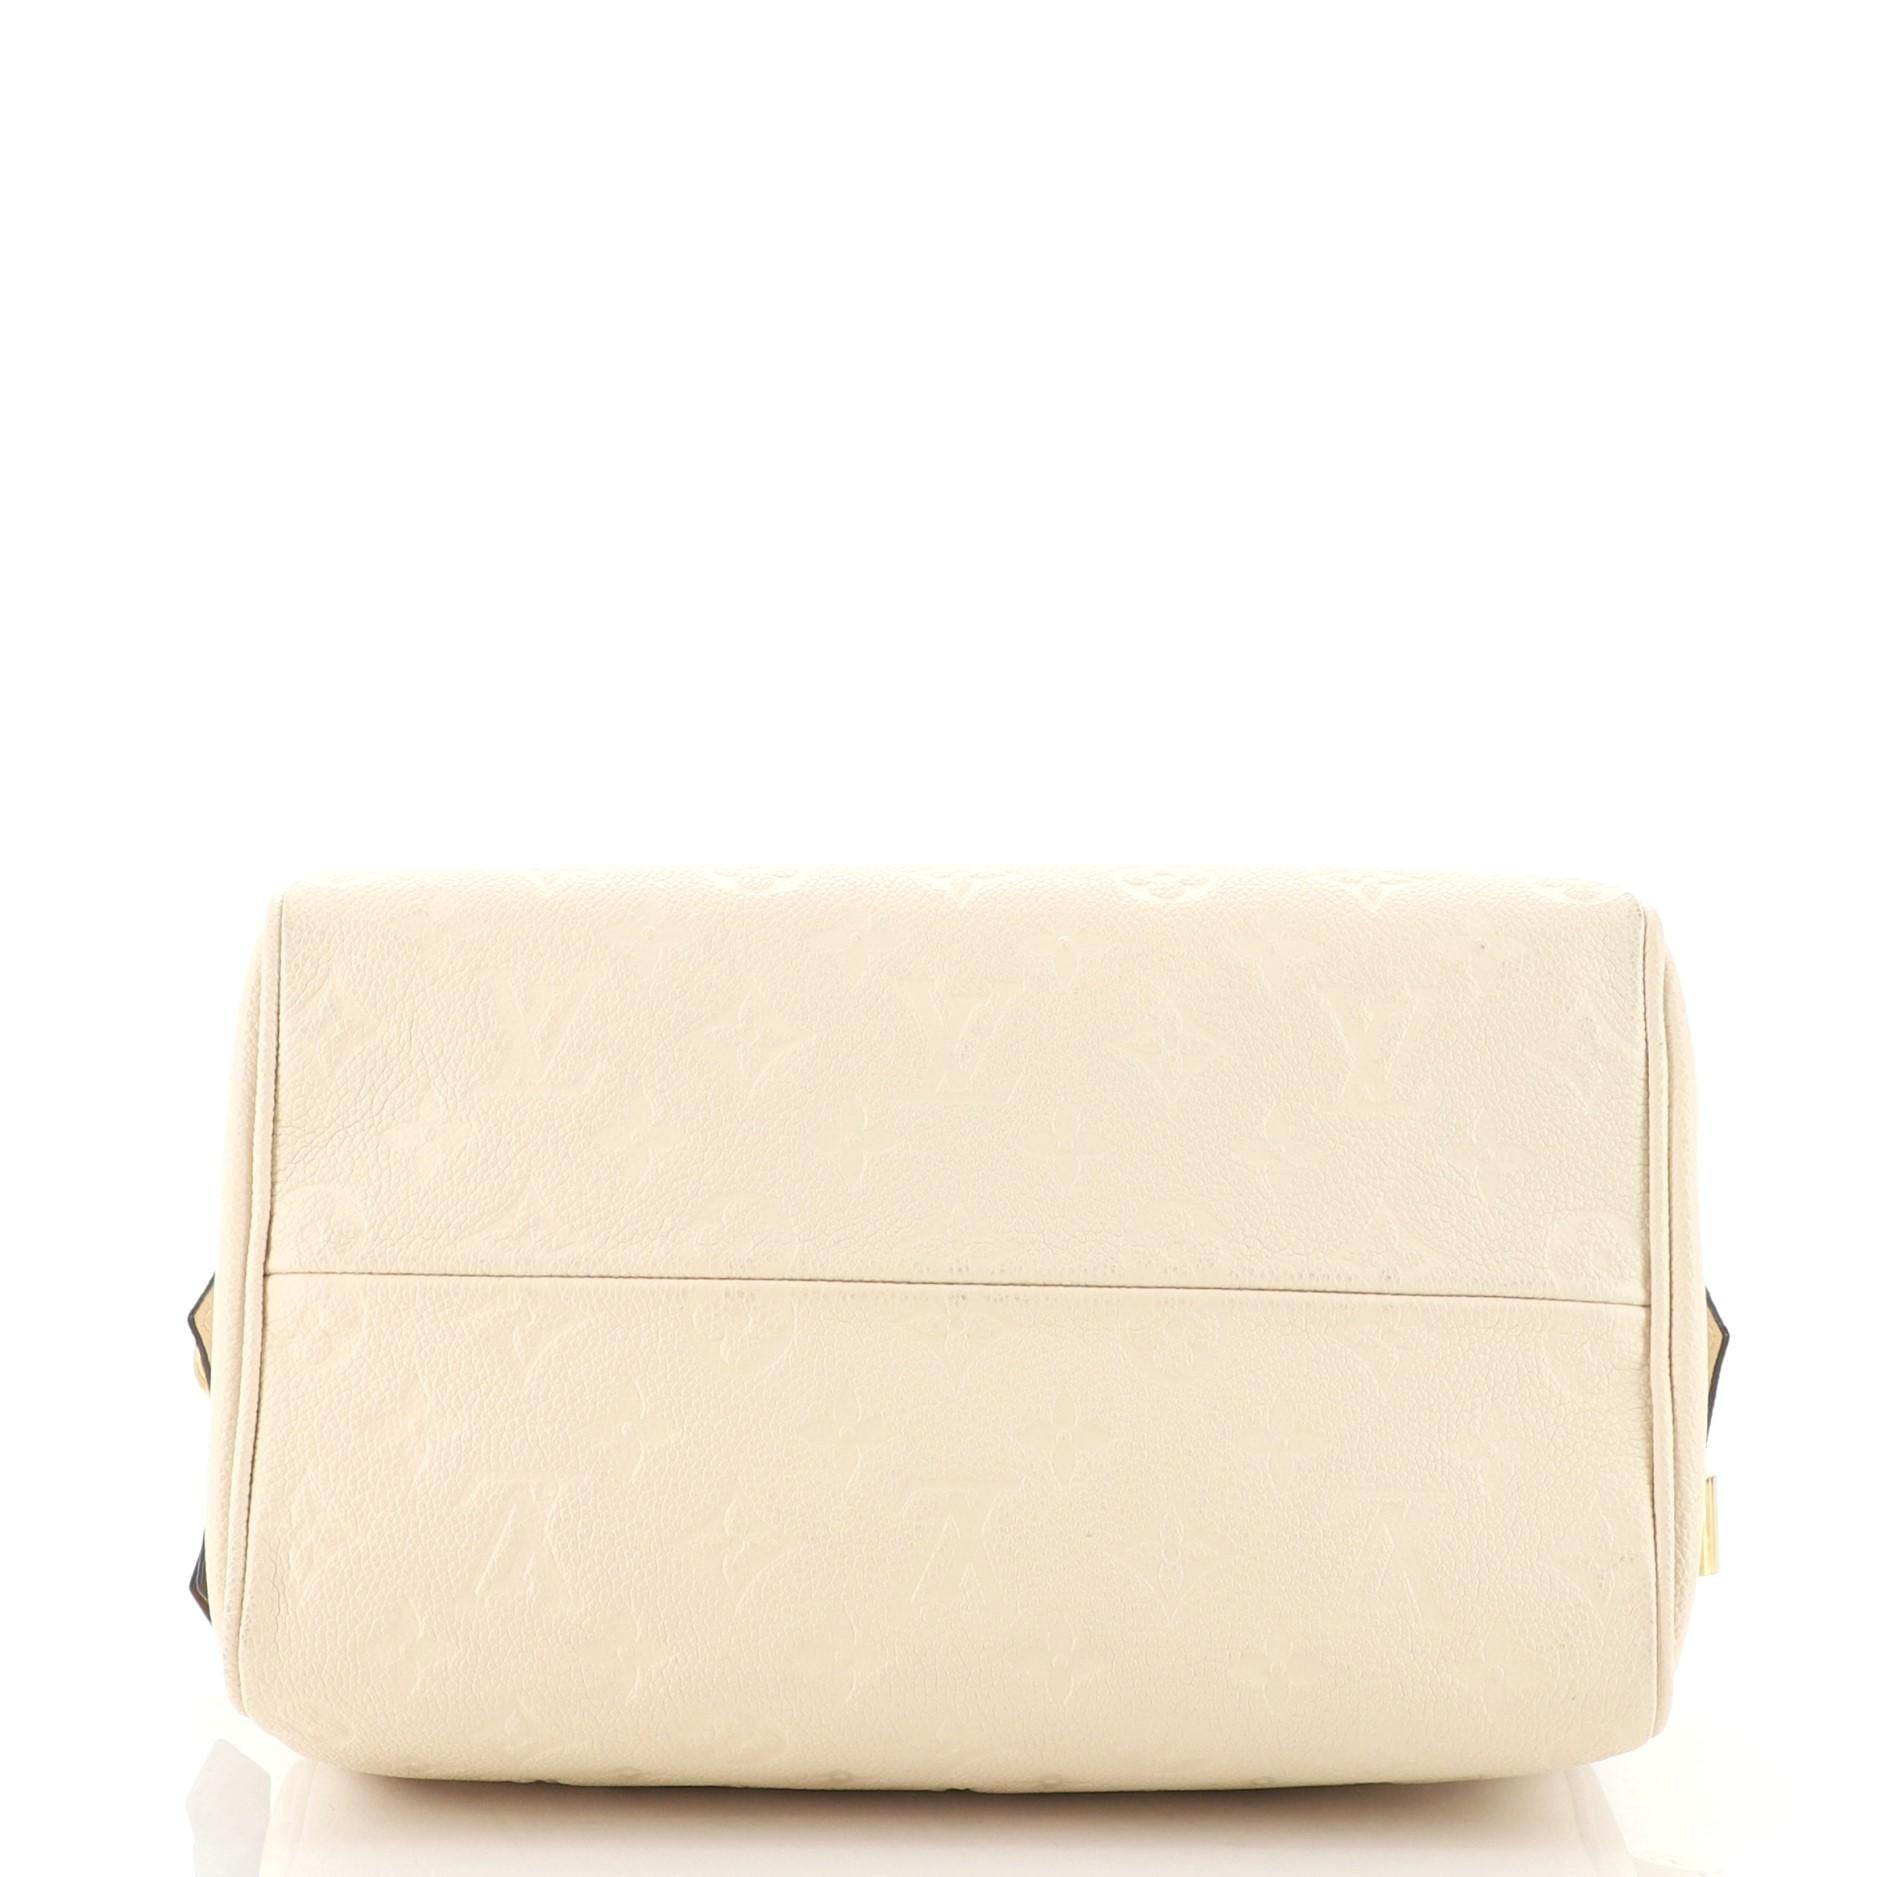 Women's or Men's Louis Vuitton Speedy Bandouliere NM Bag Monogram Empreinte Leather 25